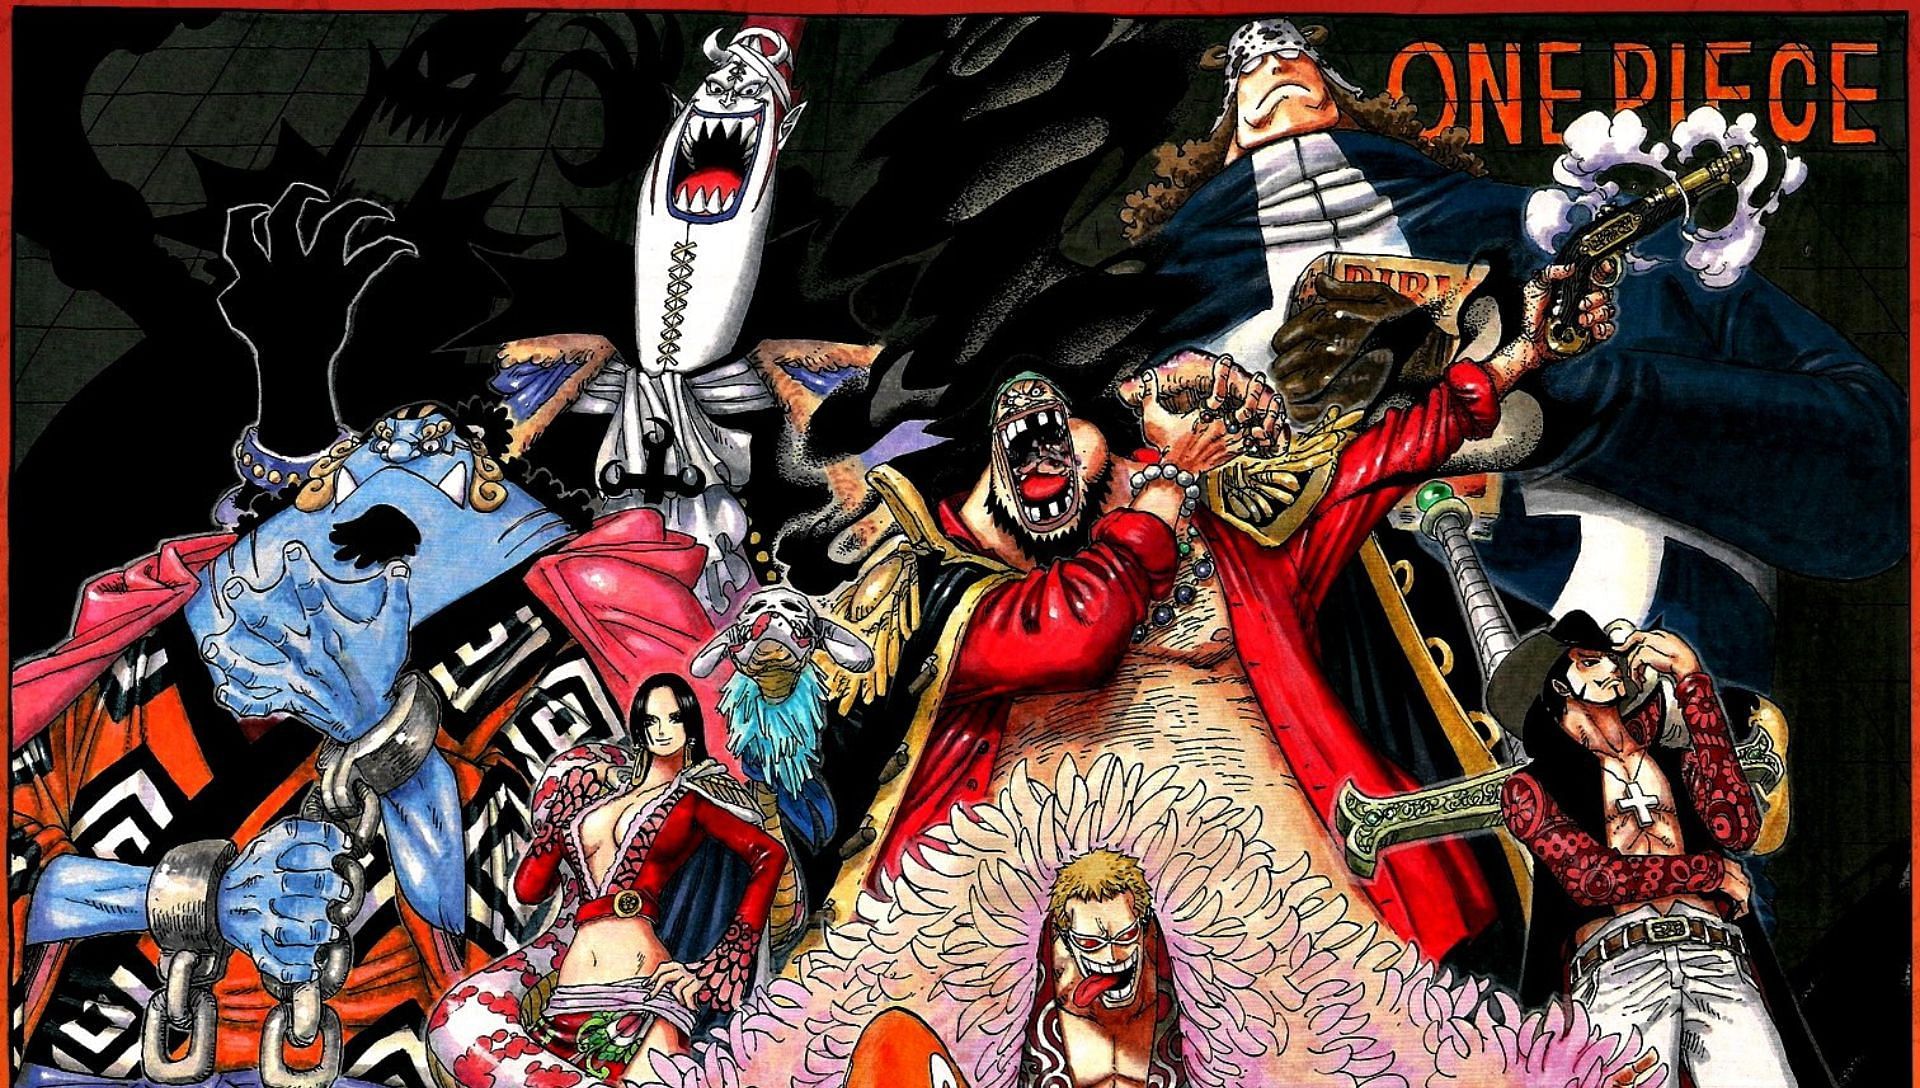 The Shichibukai as One Piece Cover (Image via Shueisha)